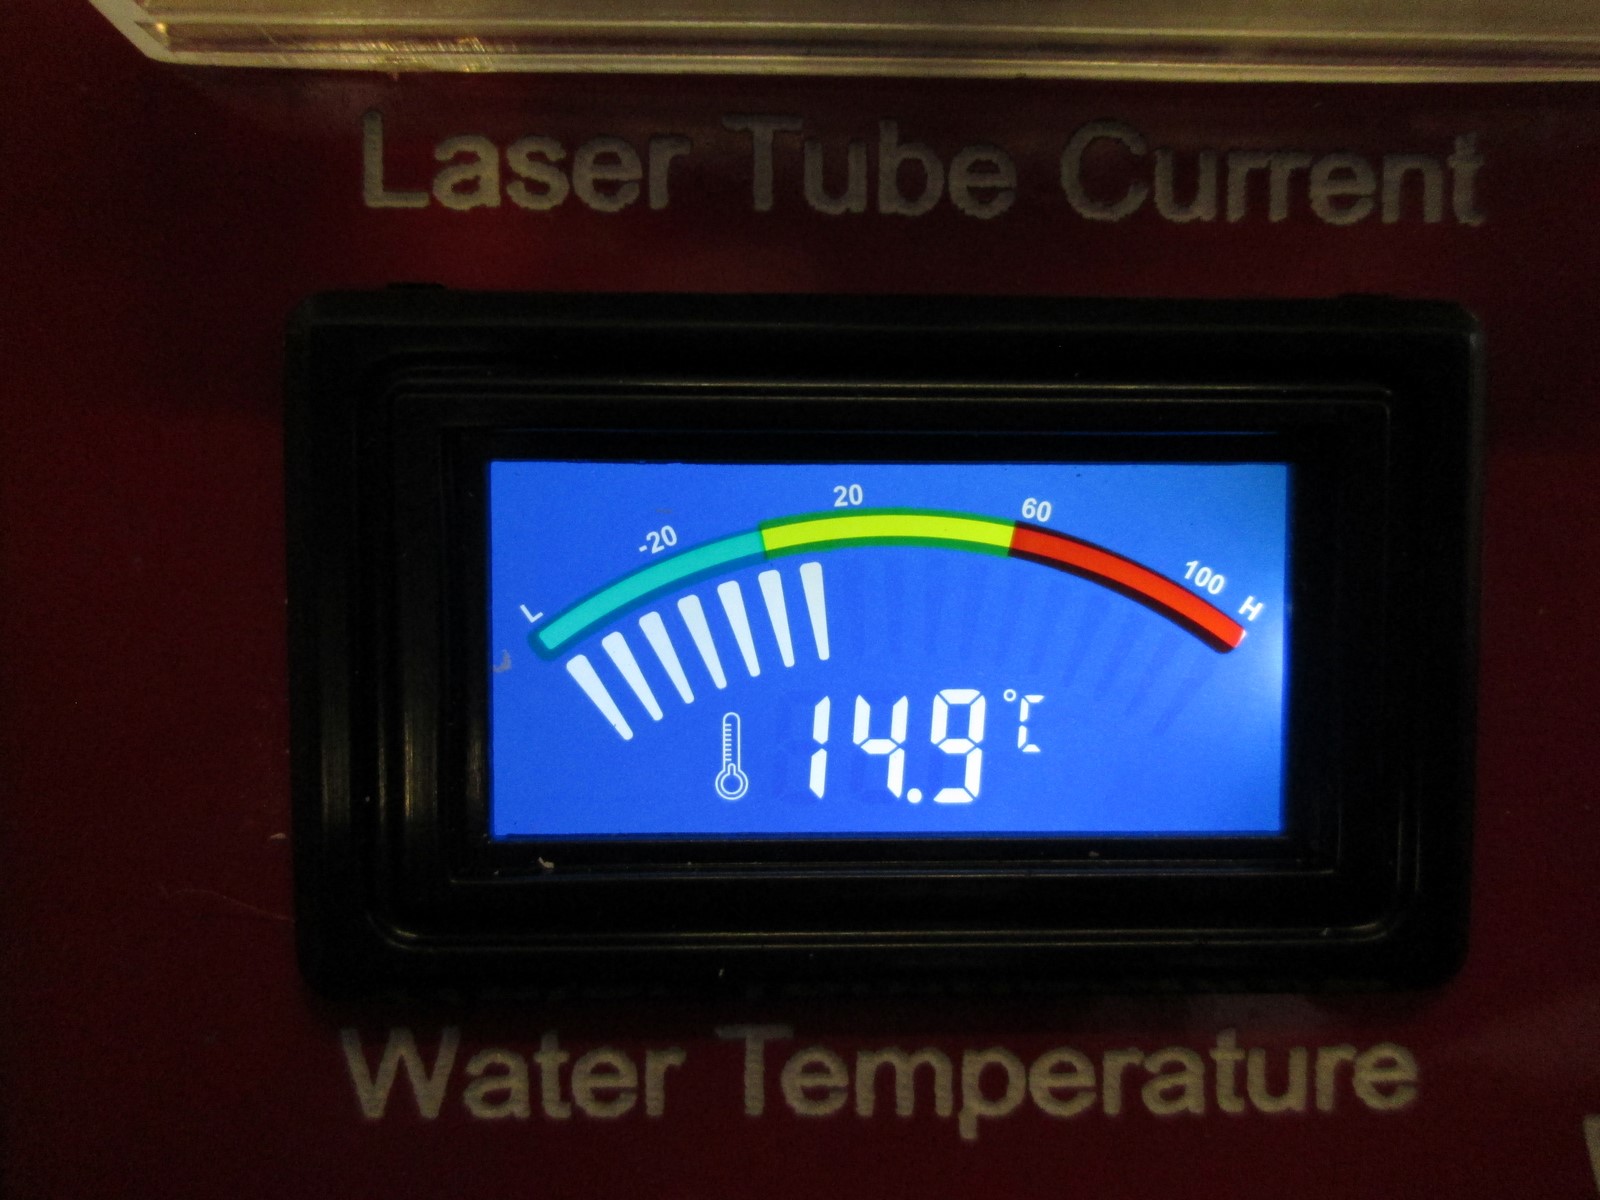 New water termperature gauge